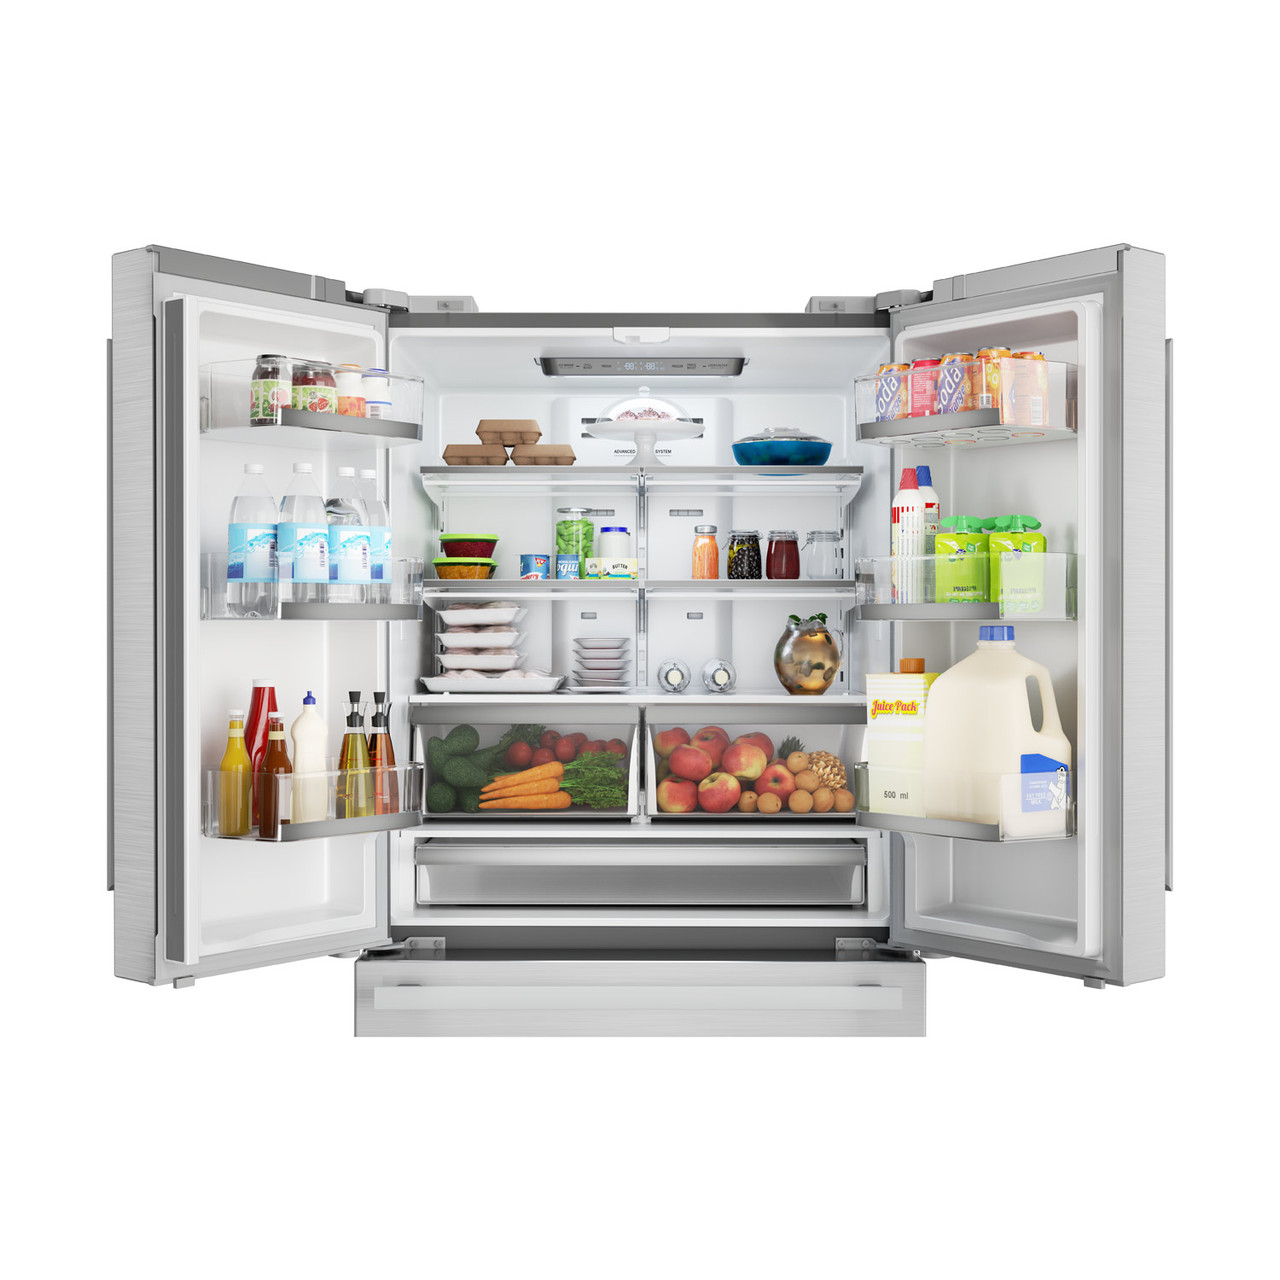 Sharp French 4-Door Counter-Depth Refrigerator (SJG2351FS) top half view with food